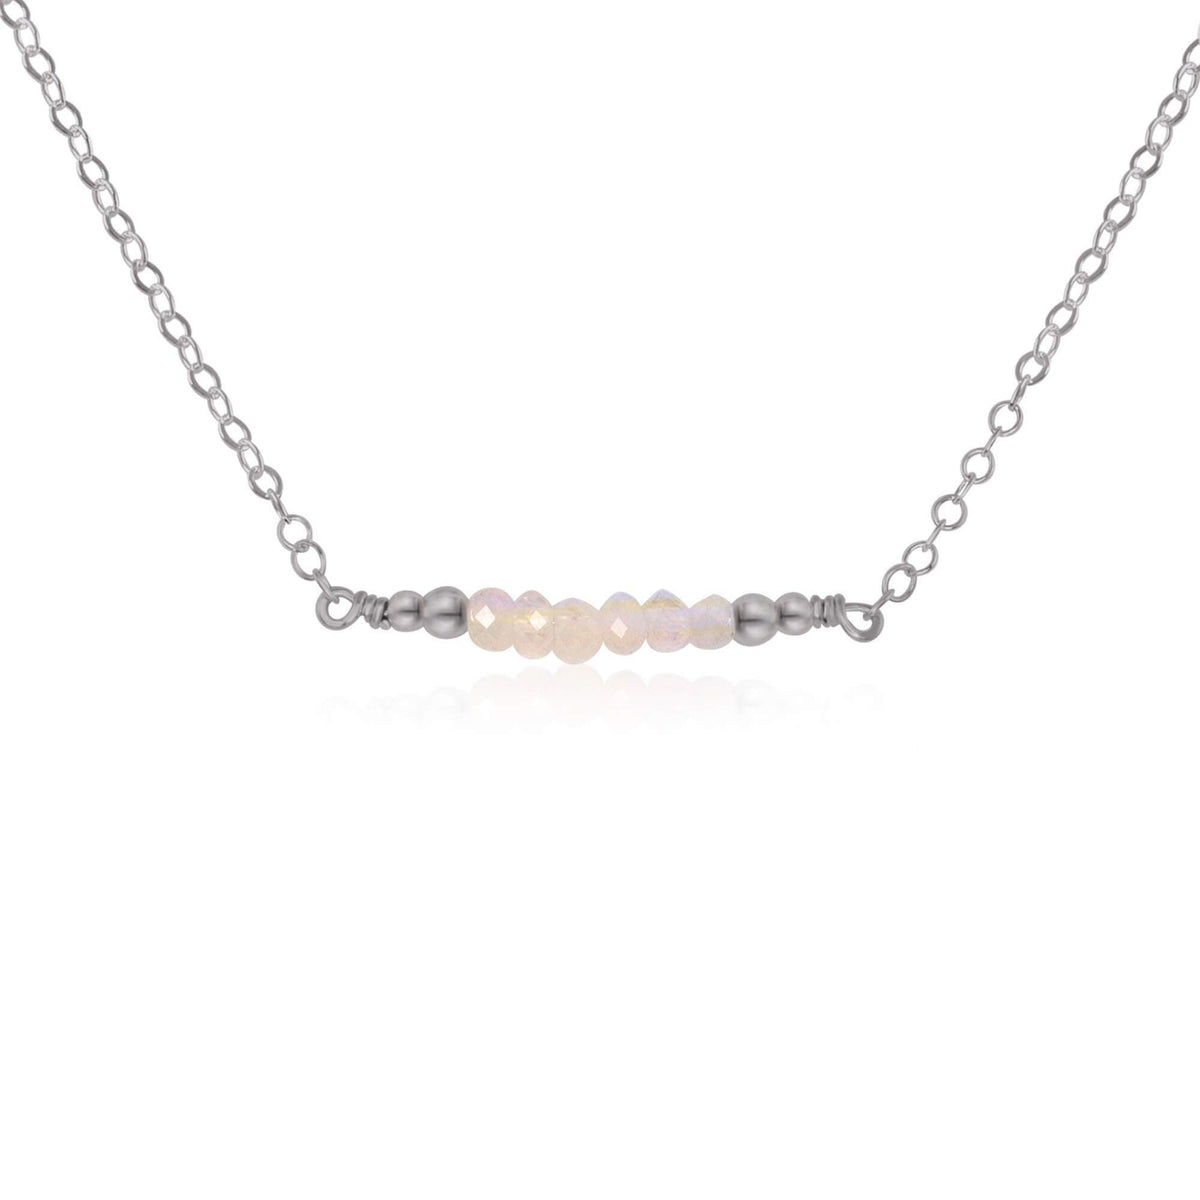 Faceted Bead Bar Necklace - Rainbow Moonstone - Stainless Steel - Luna Tide Handmade Jewellery